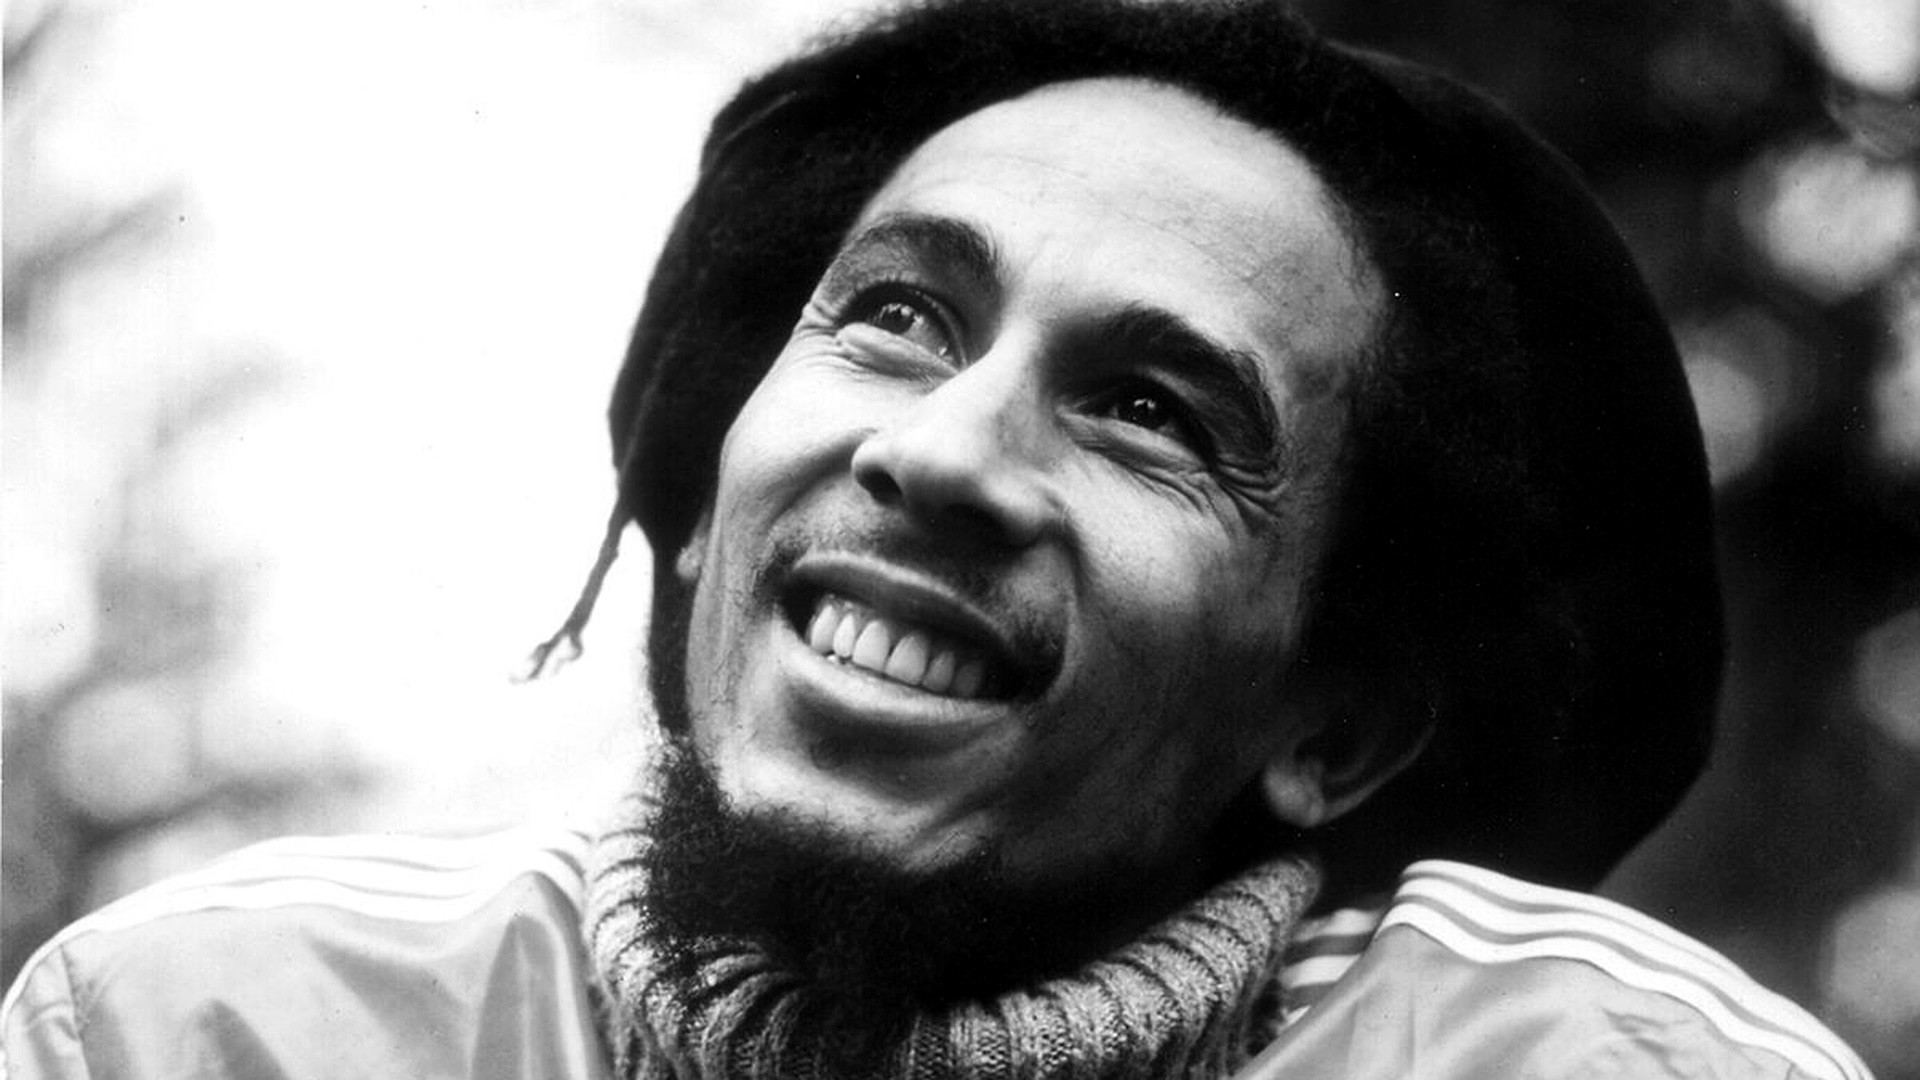 Bob Marley looking up and smiling